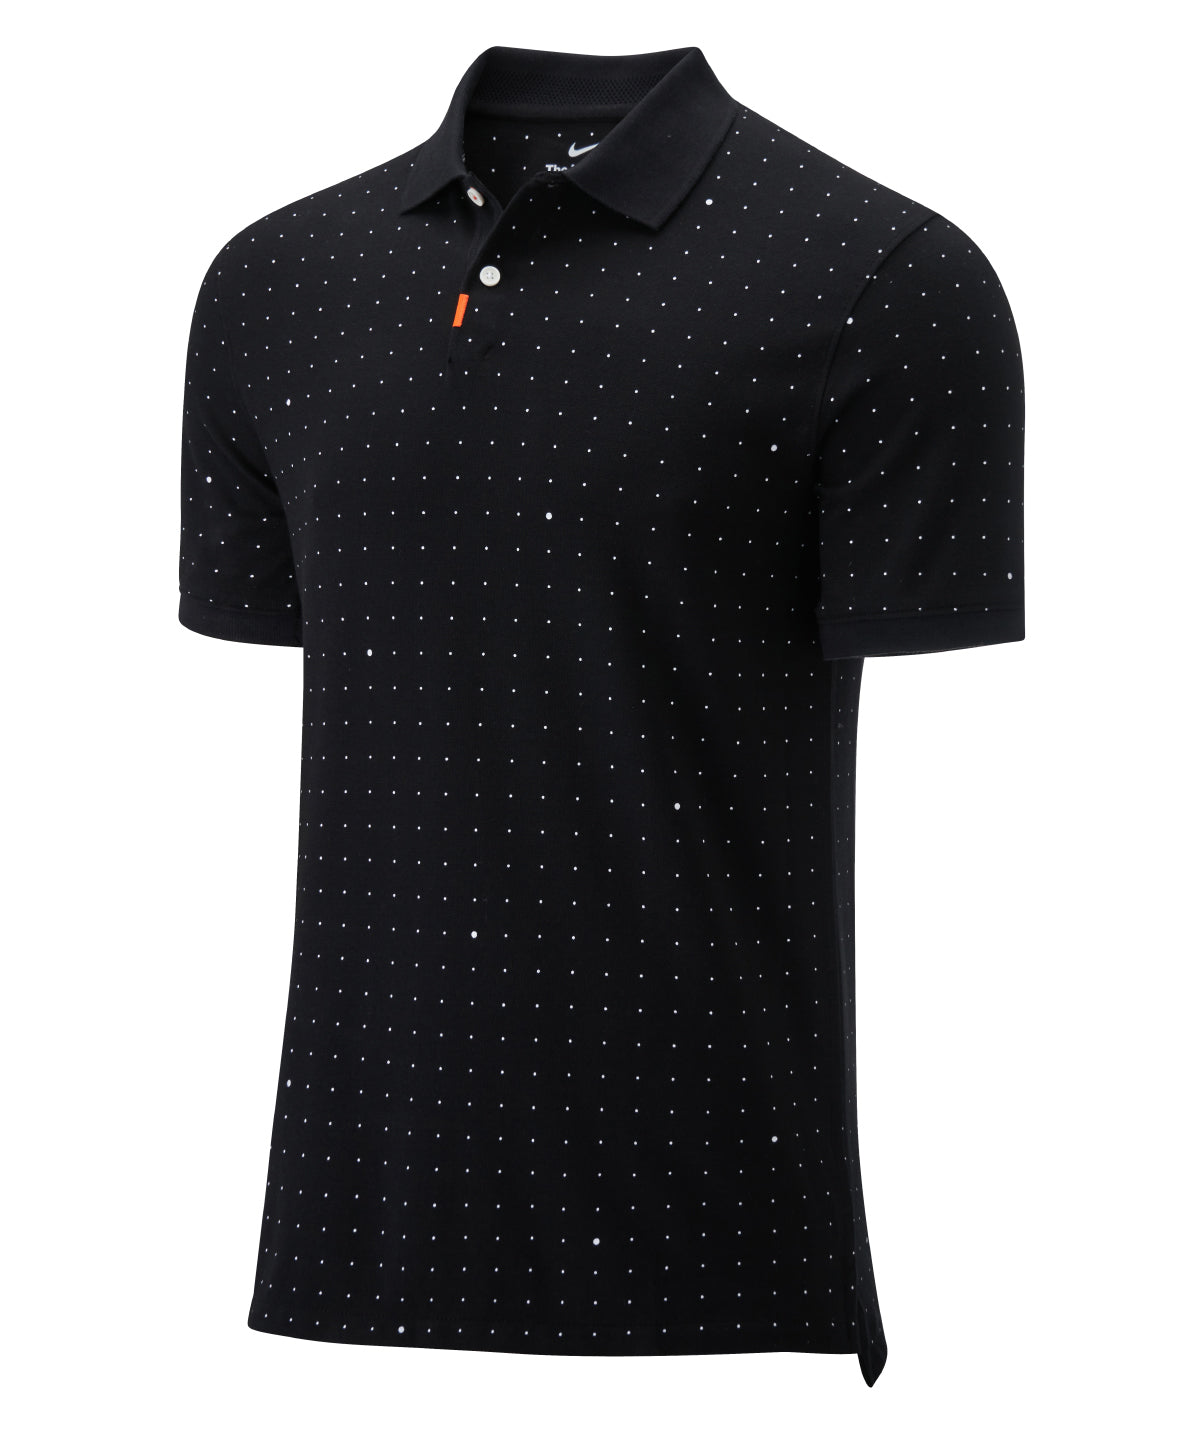 Personalised Polo Shirts - Black Nike The Nike polo golf space dot slim